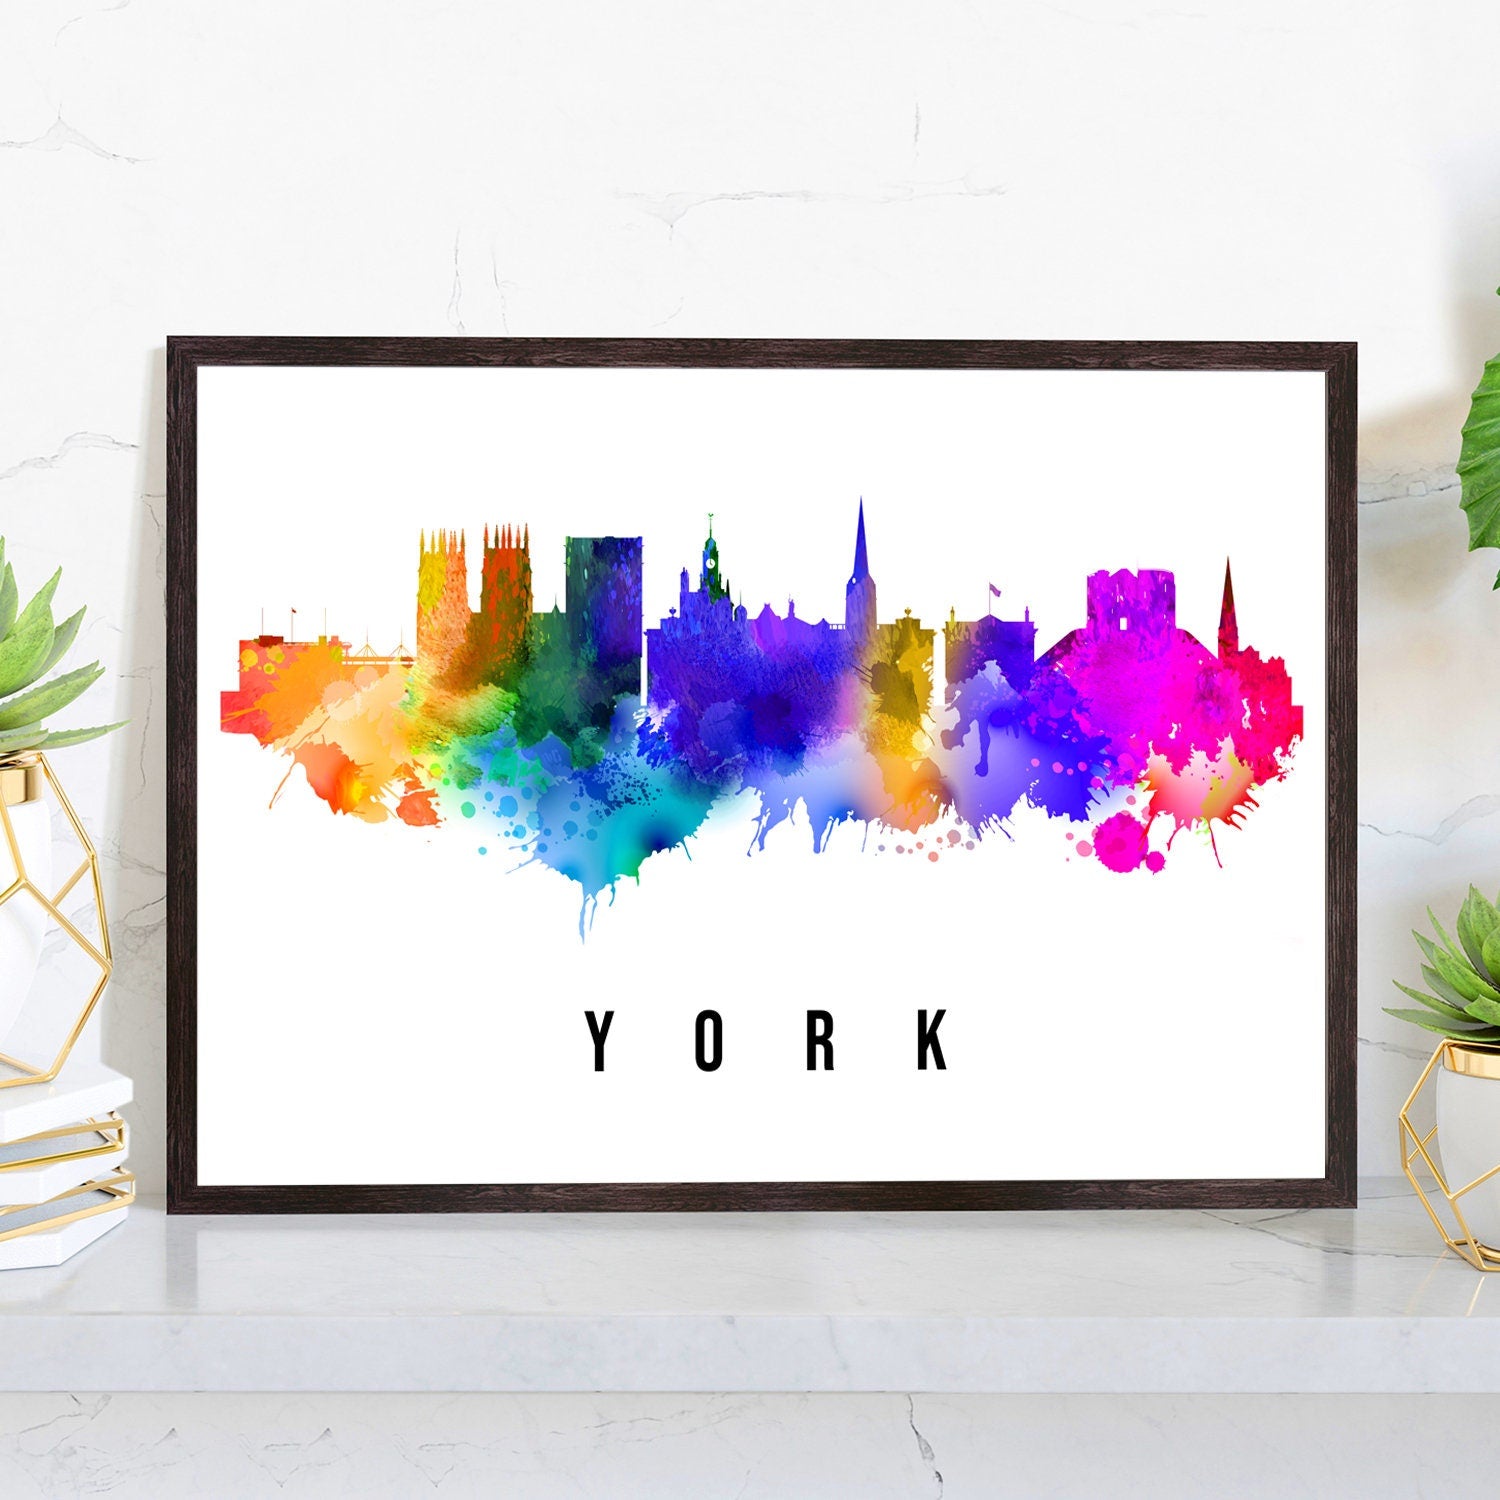 York England Poster, Skyline poster cityscape poster, Landmark City Illustration poster, Home wall decoration, Office wall art